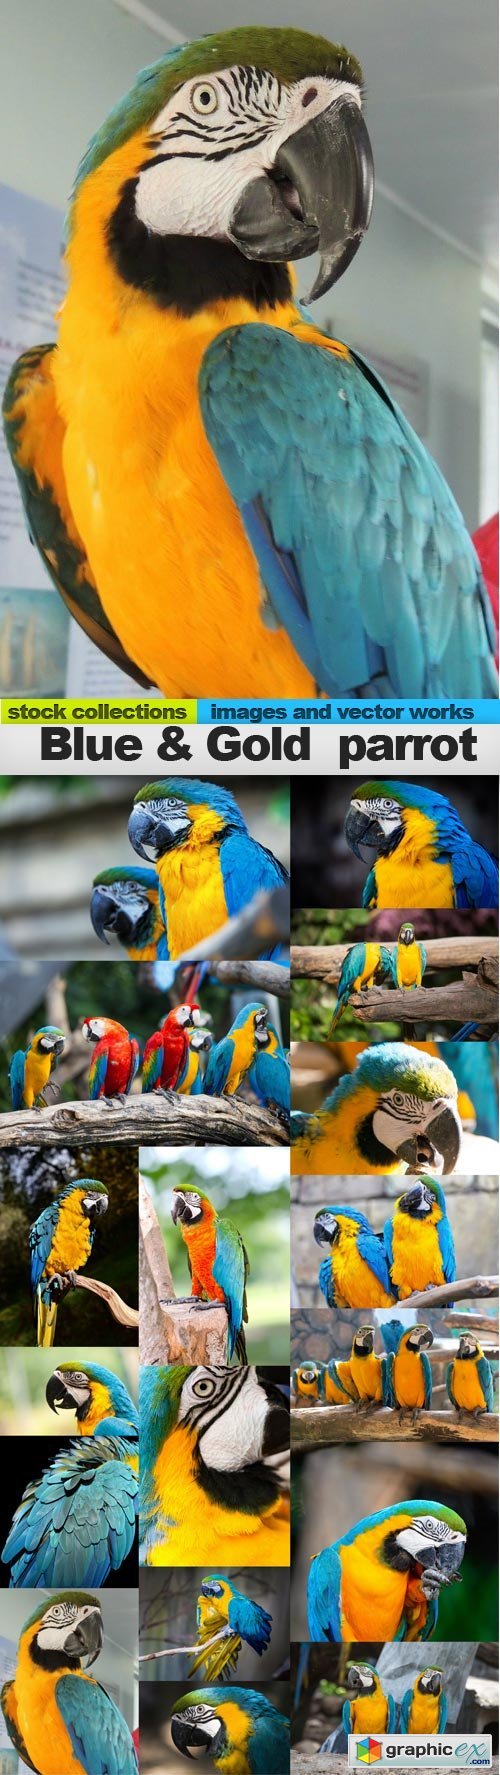 Blue & Gold parrot, 17 x UHQ JPEG